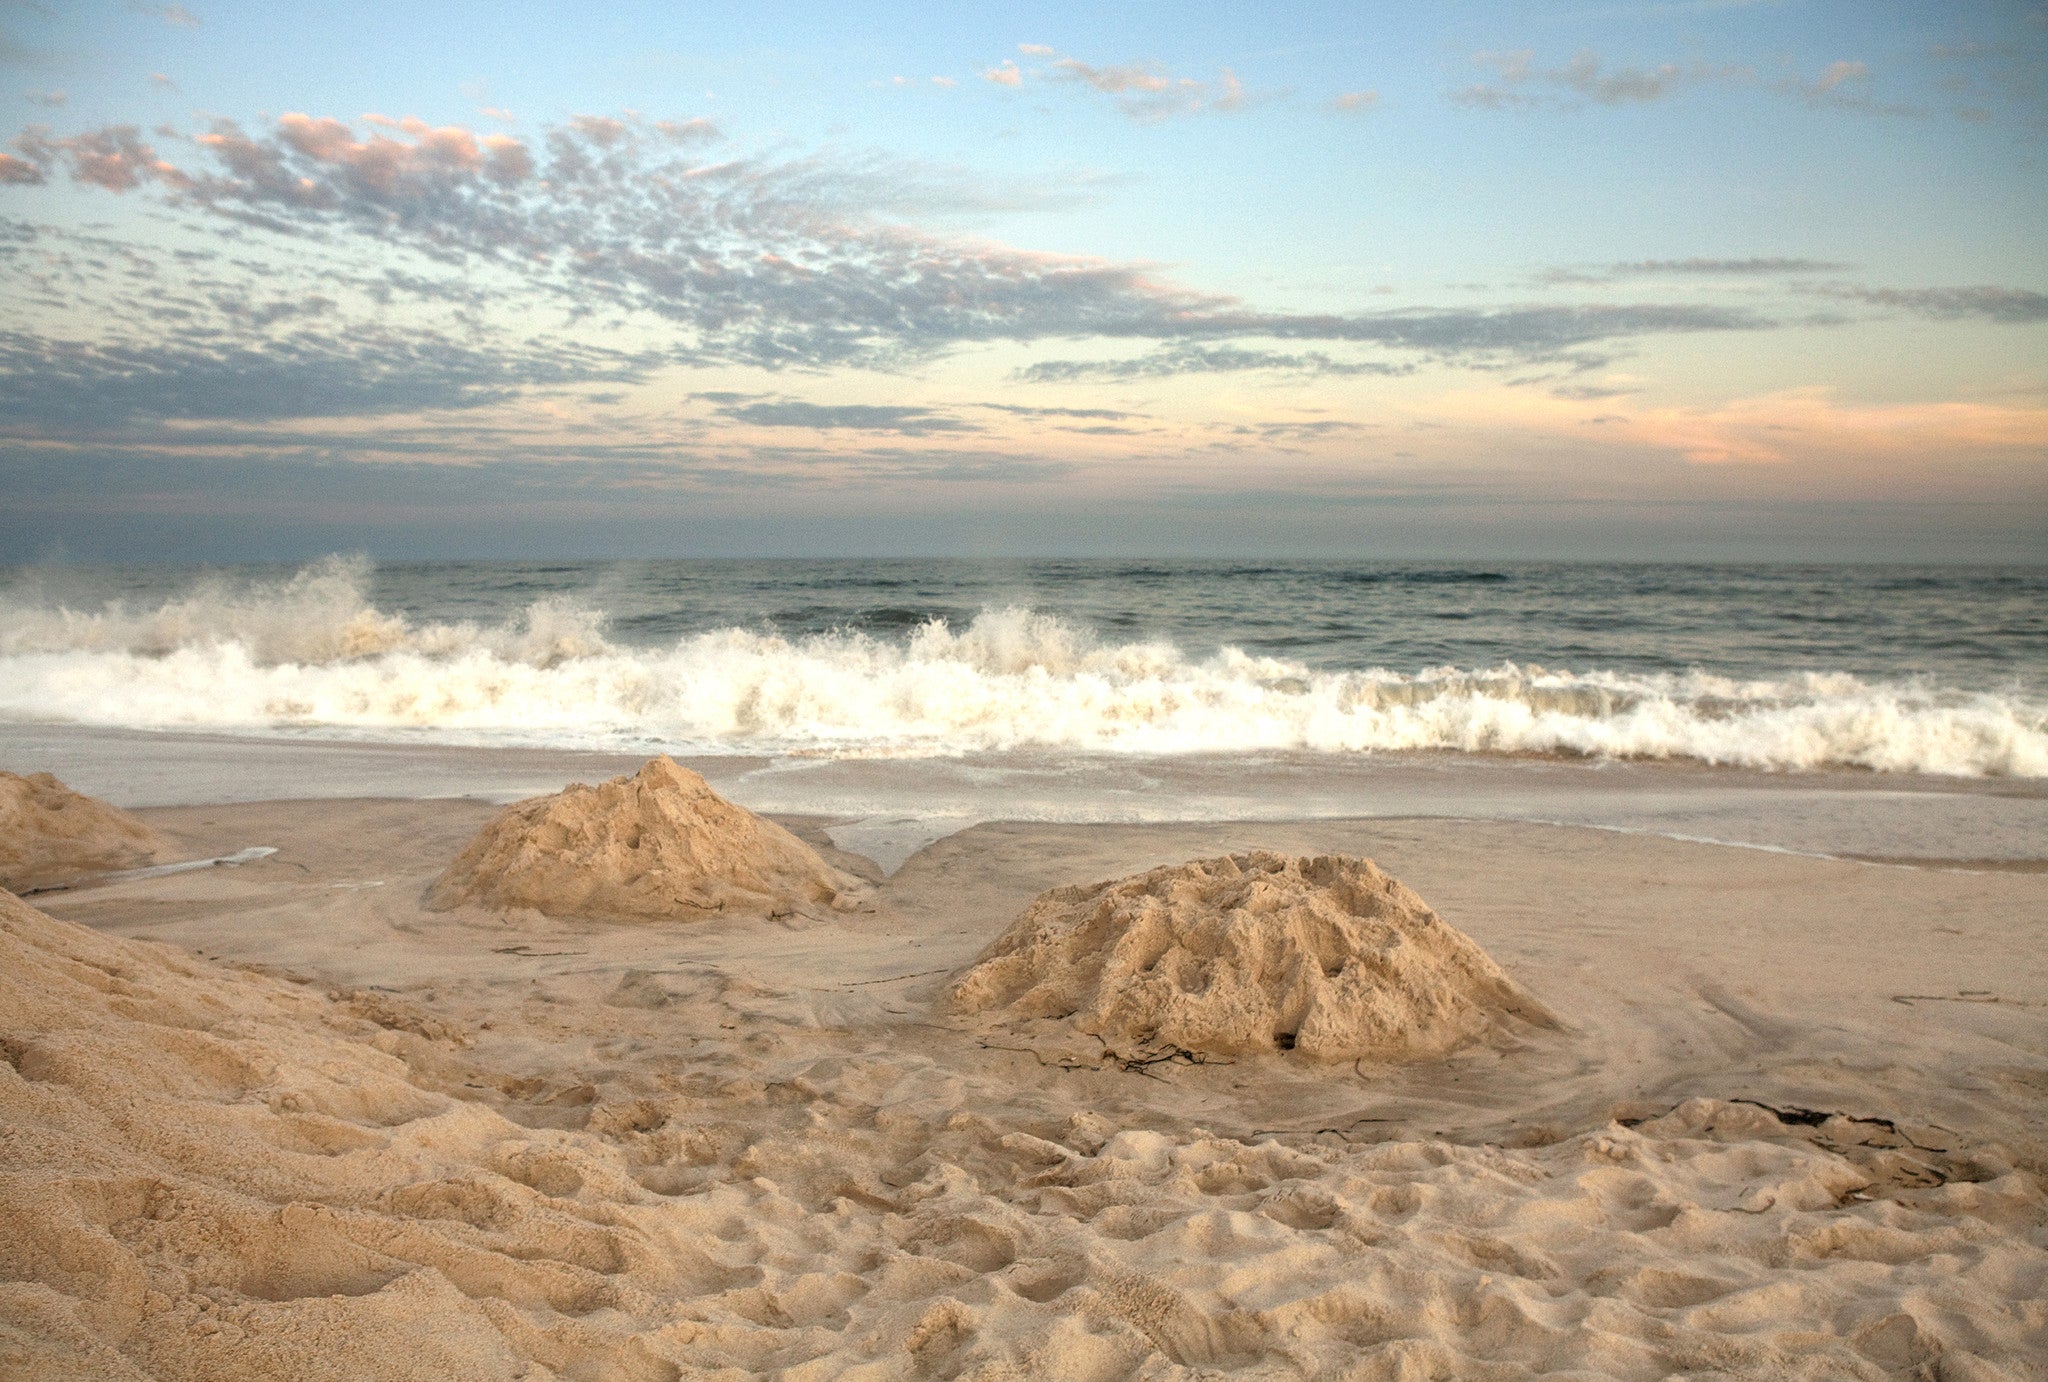 Reuben's Sandcastles, by Michael Williams